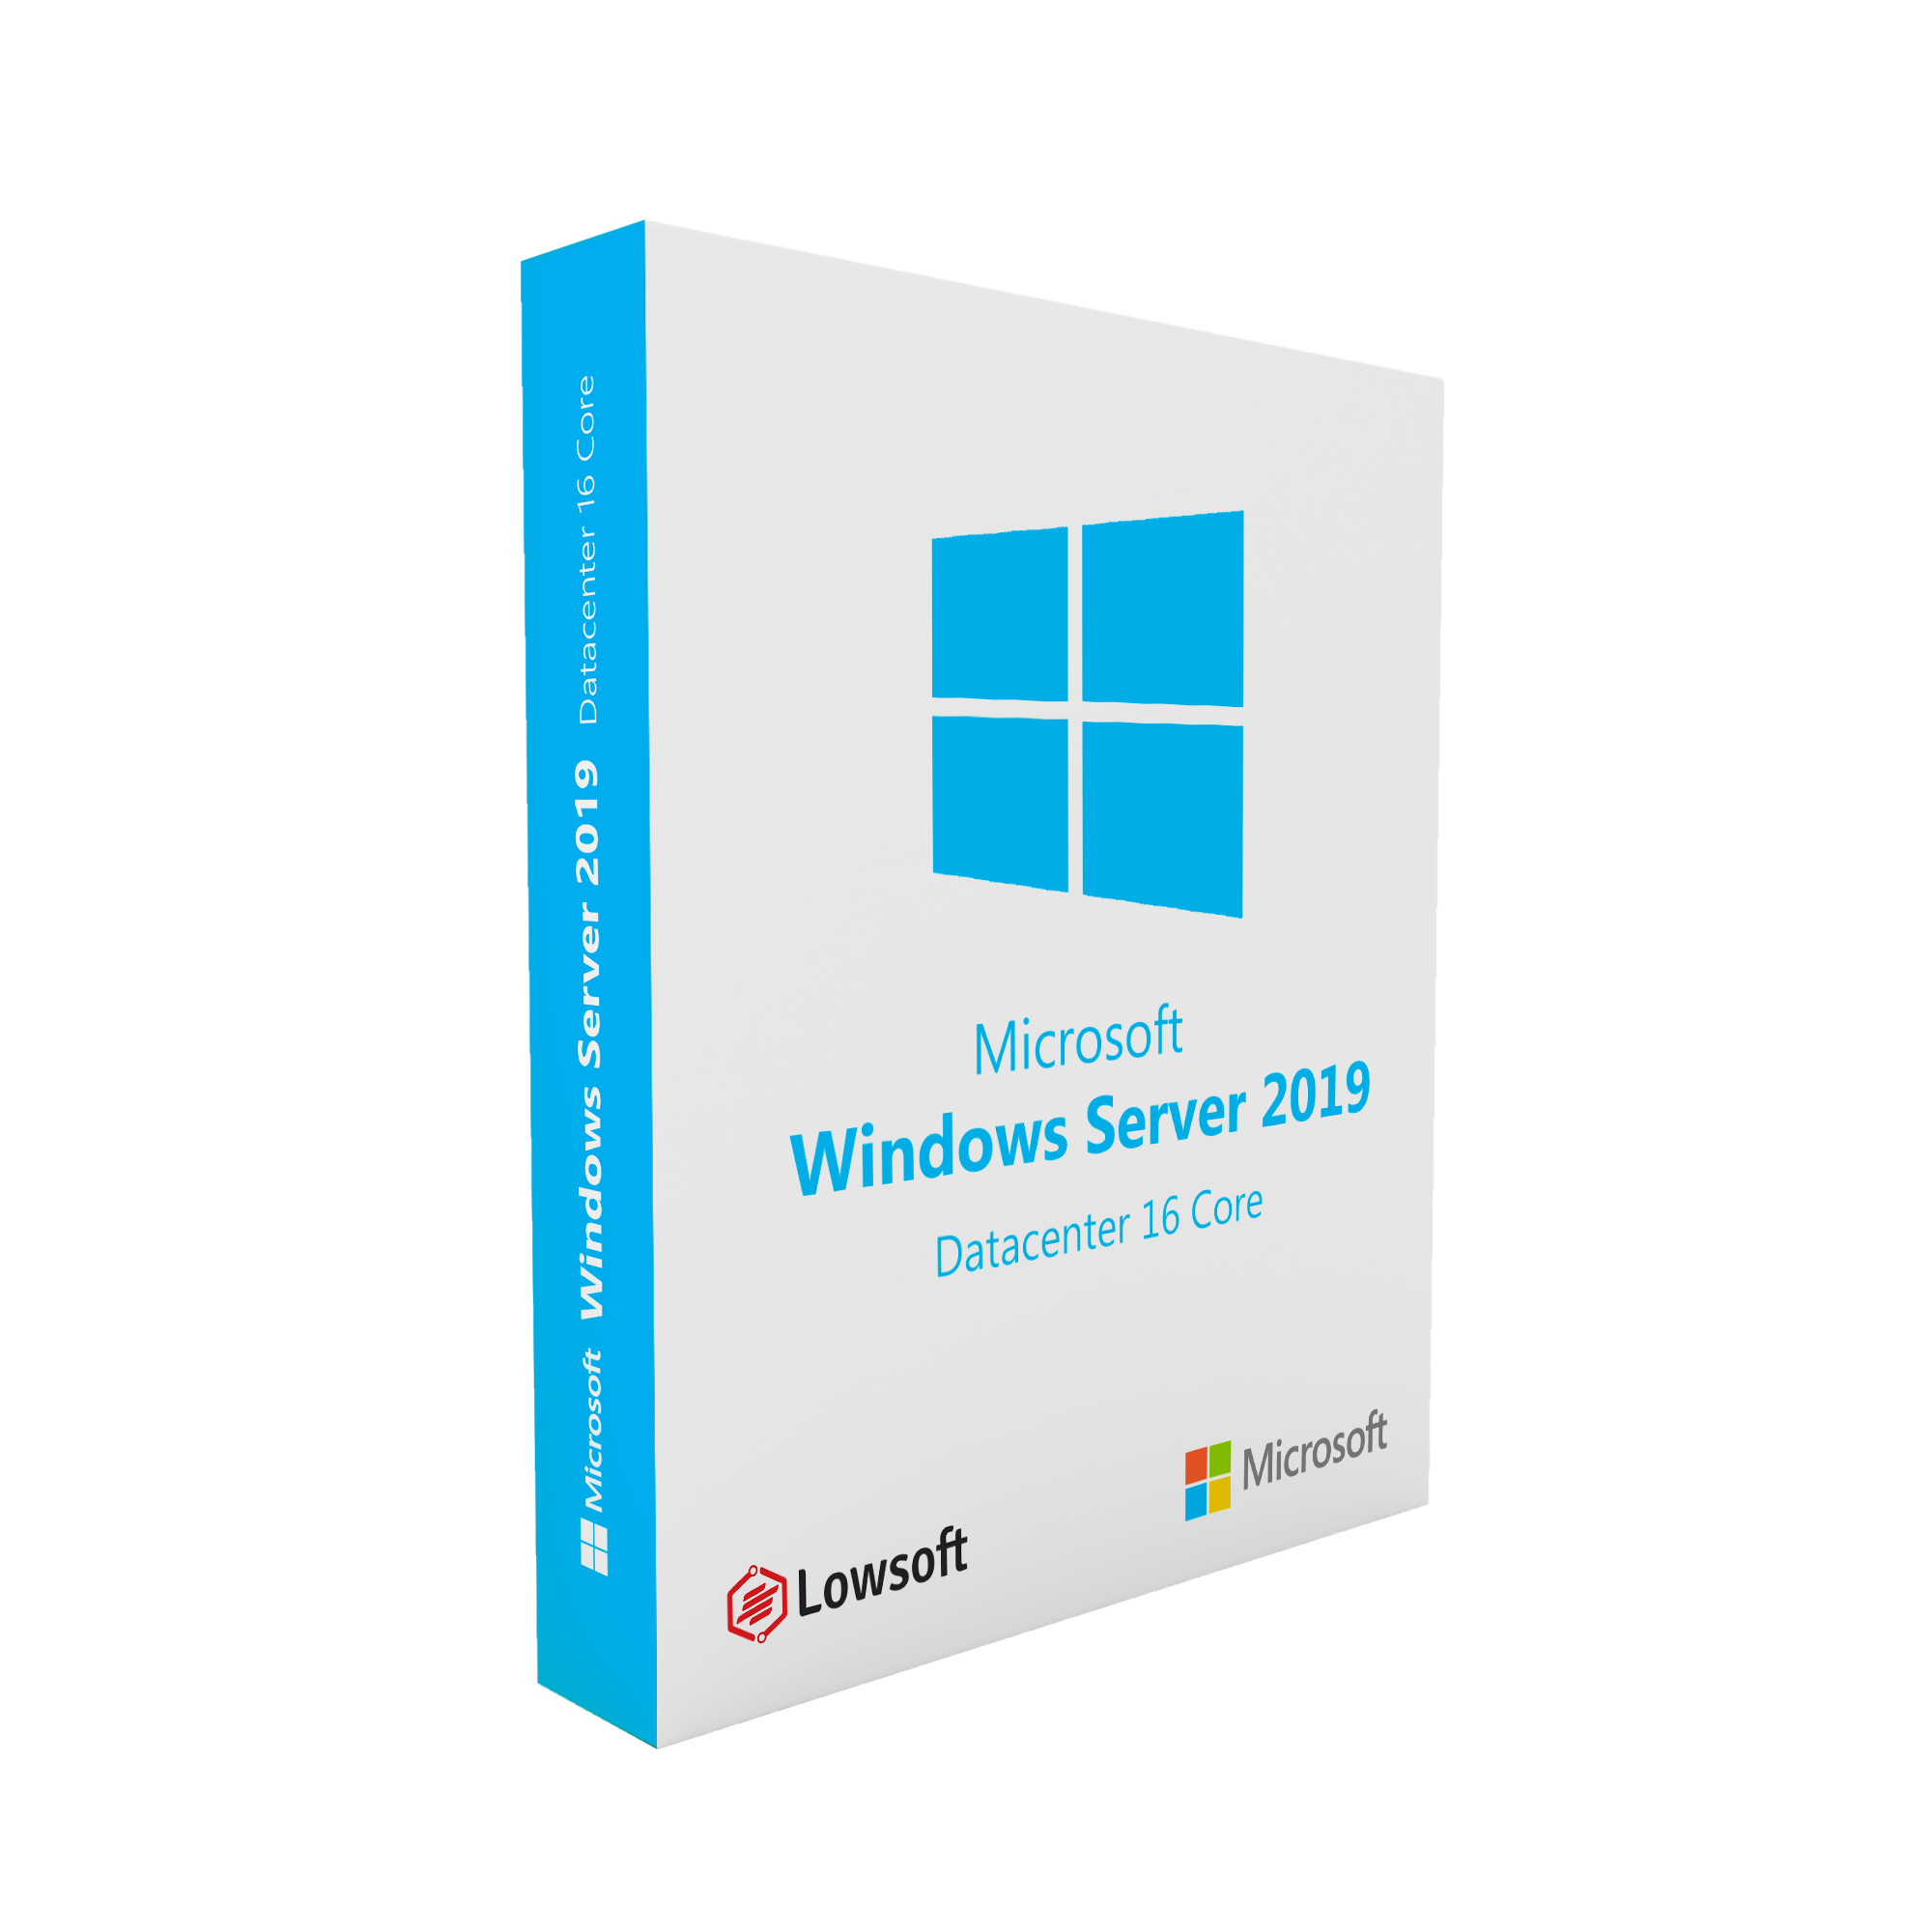 Windows Server 2019 Datacenter (16 Core)